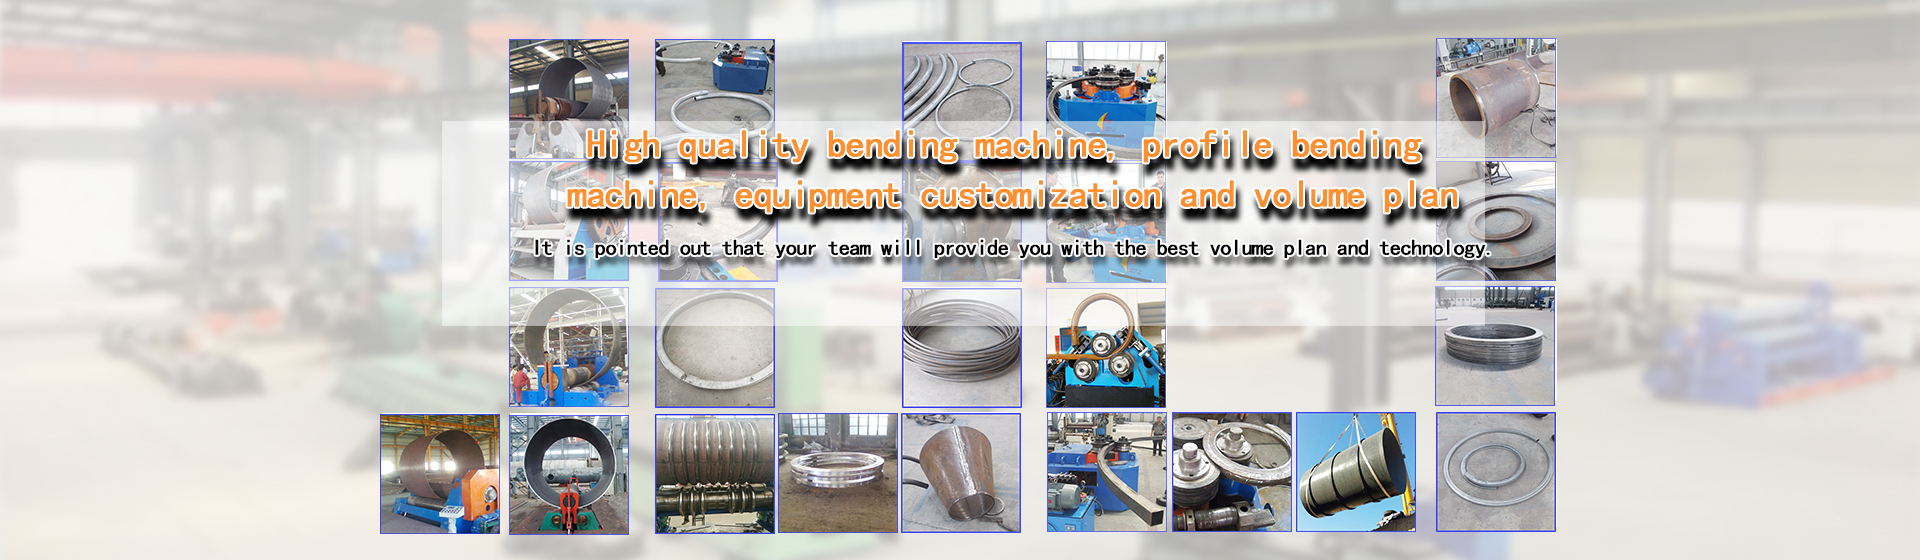 Puyang Juli Forging Machine Tool Manufacturing Co., Ltd.